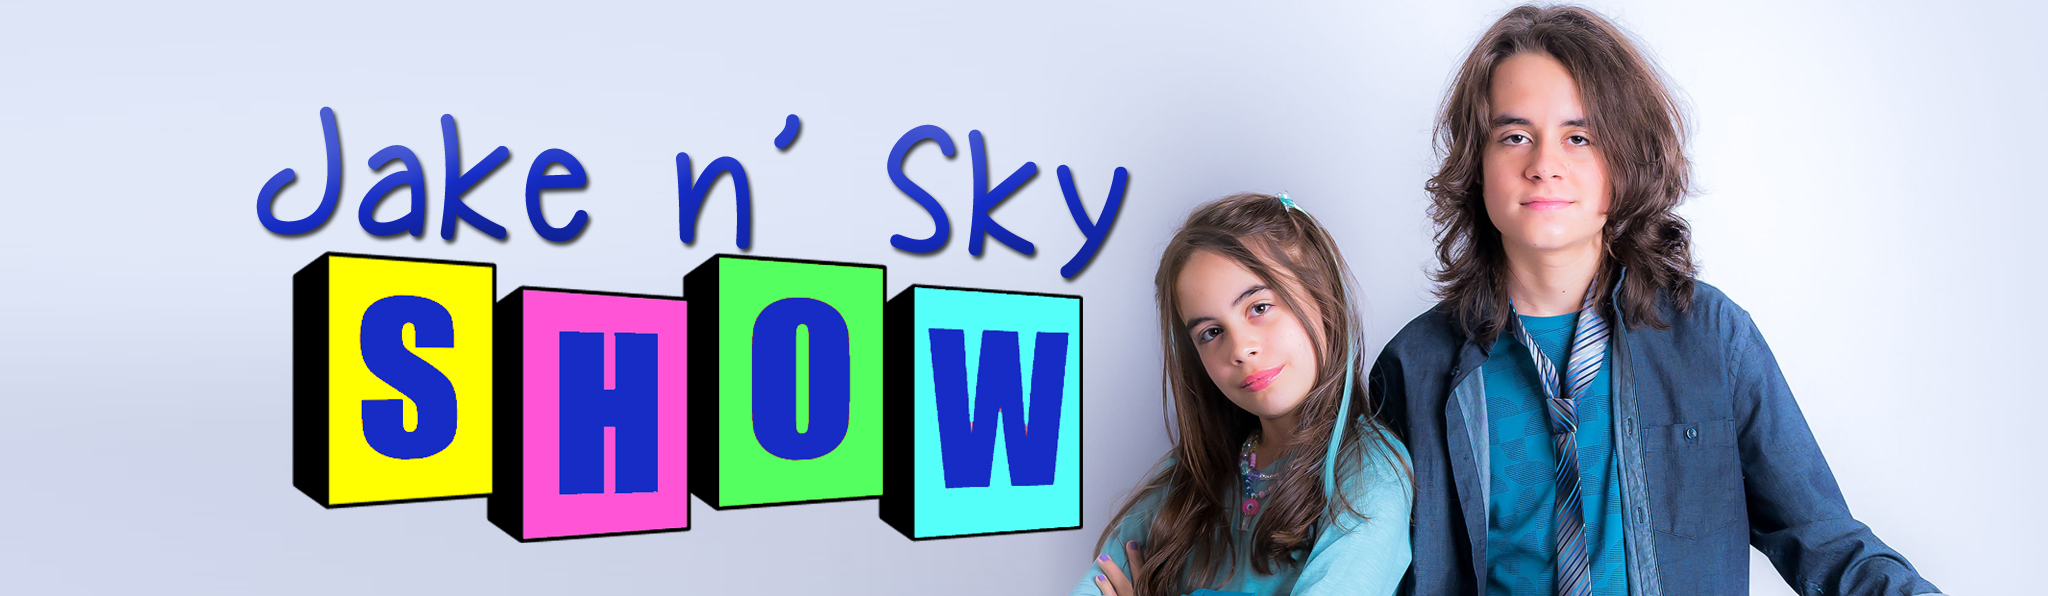 The Jake n’ Sky Show